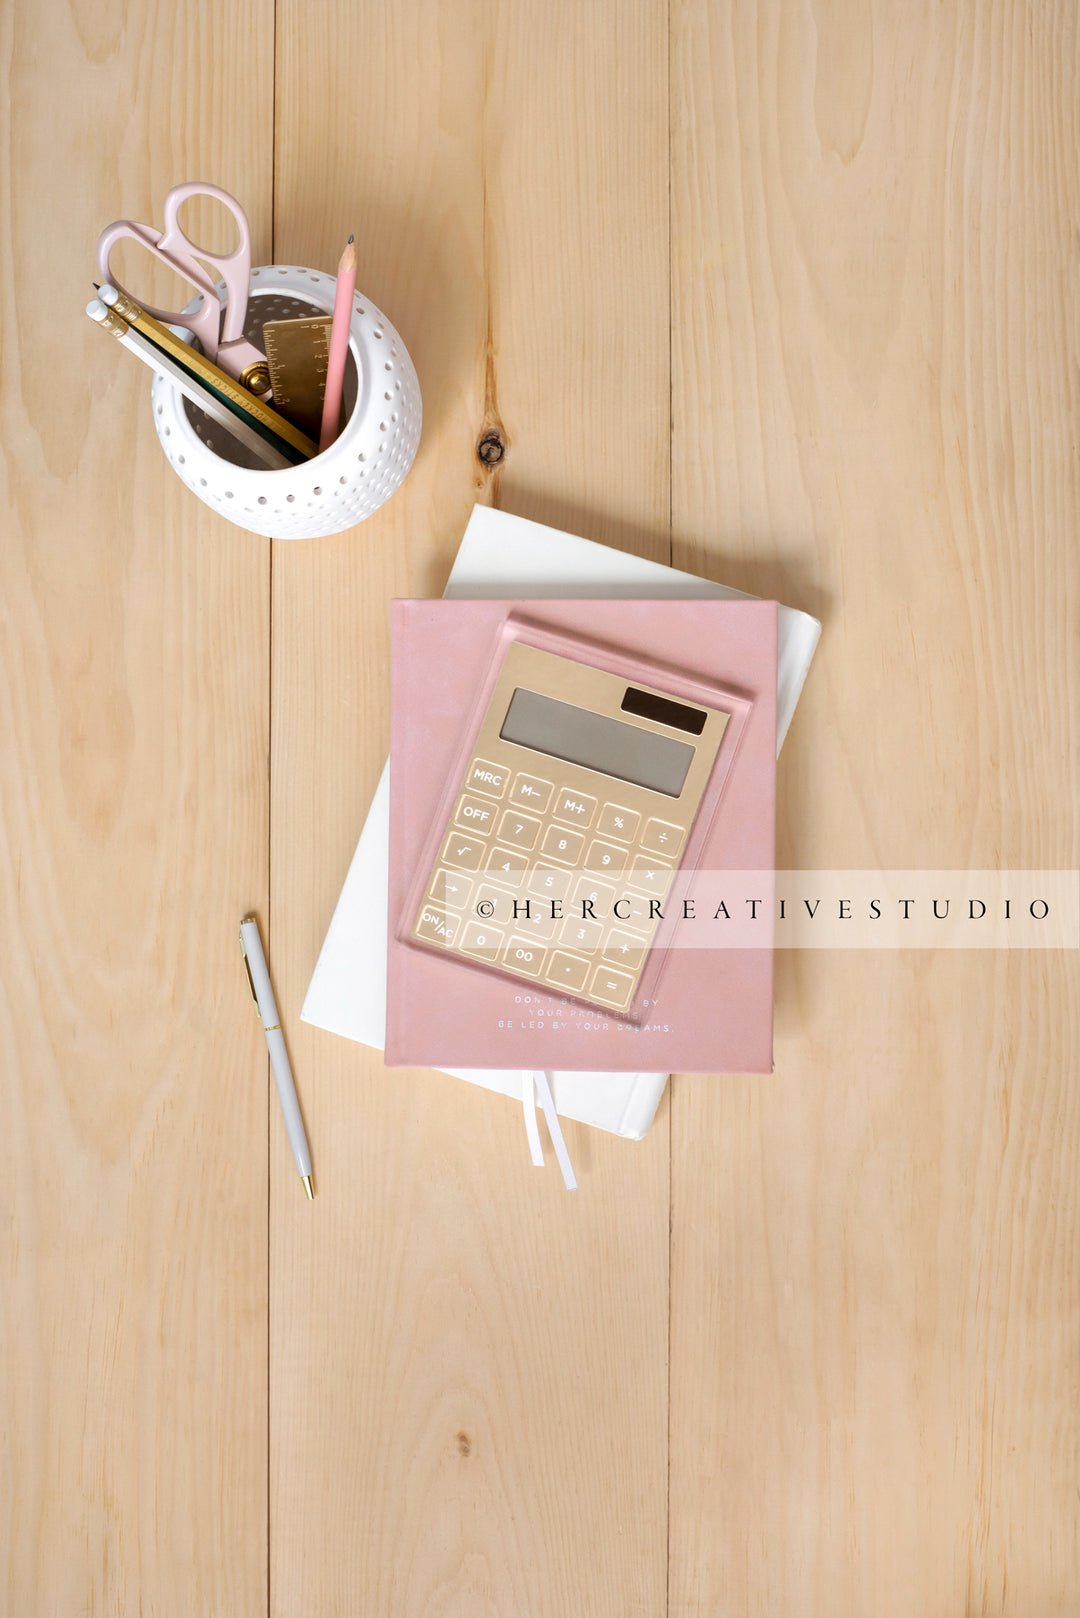 Calculator & Pencil Holder on Light Wood Floor, Styled Stock Image